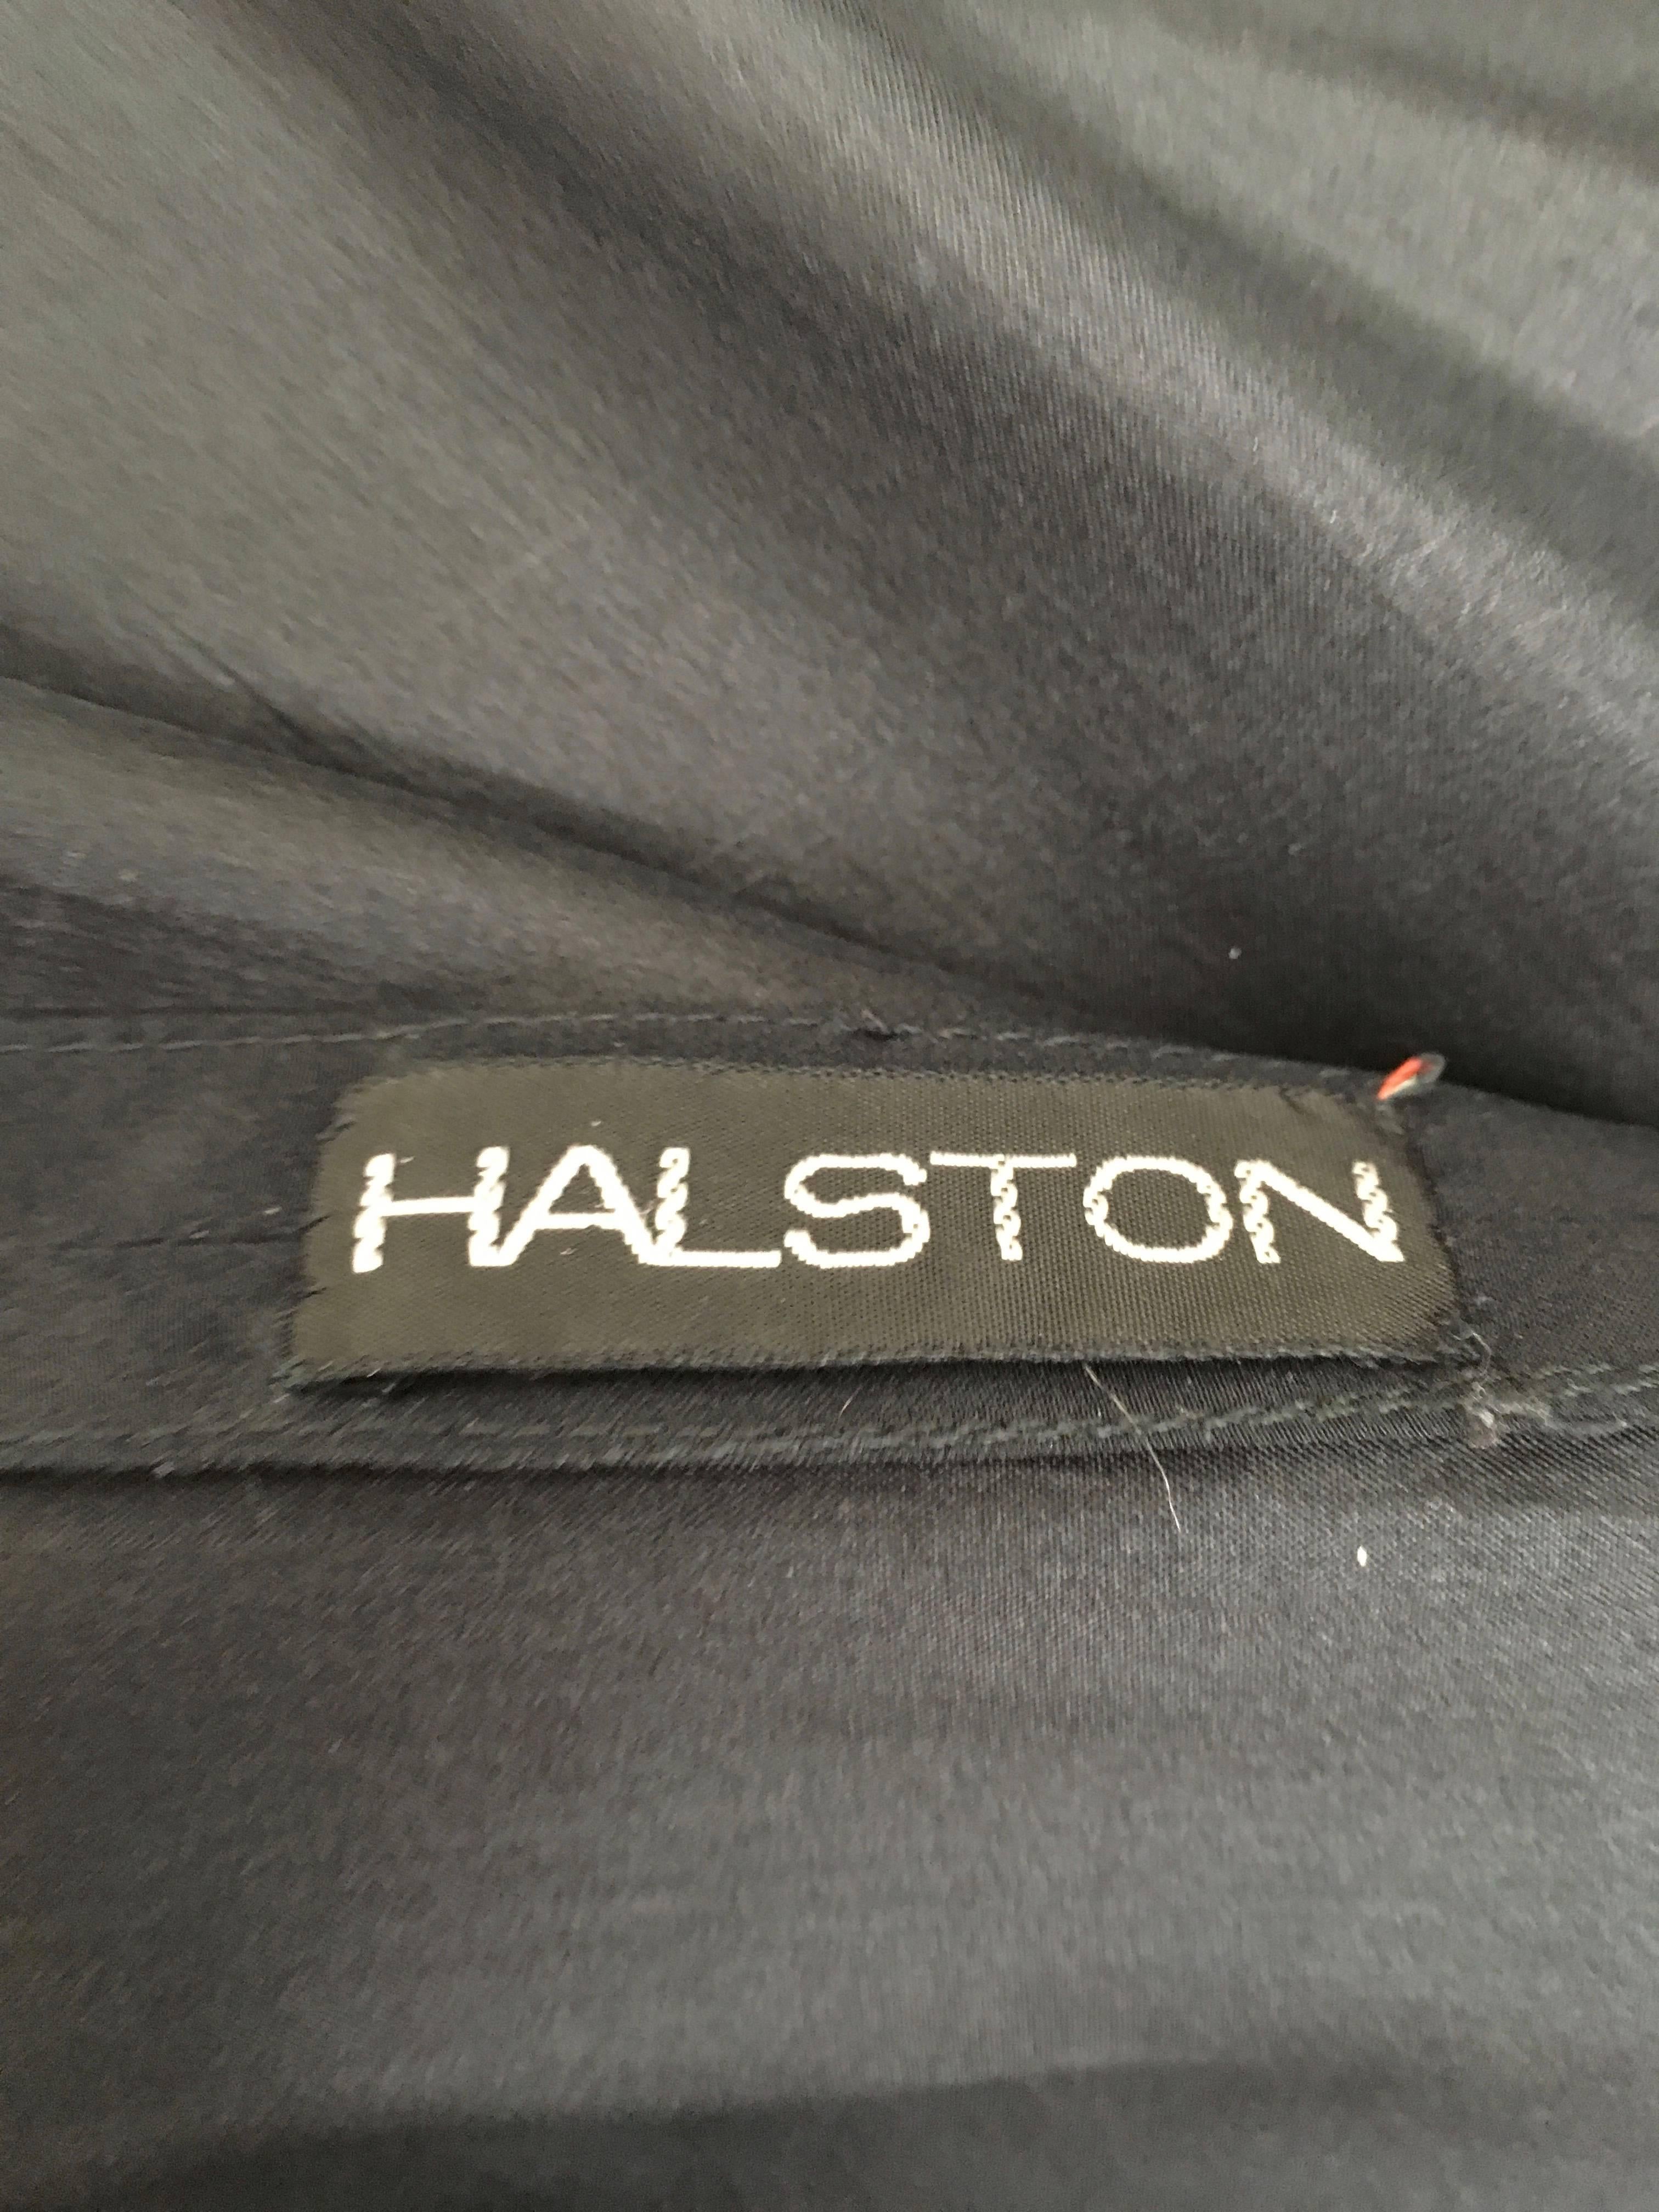 Halston 1970s Black Silk Polka Dot Dress Size 6 / 8. 4